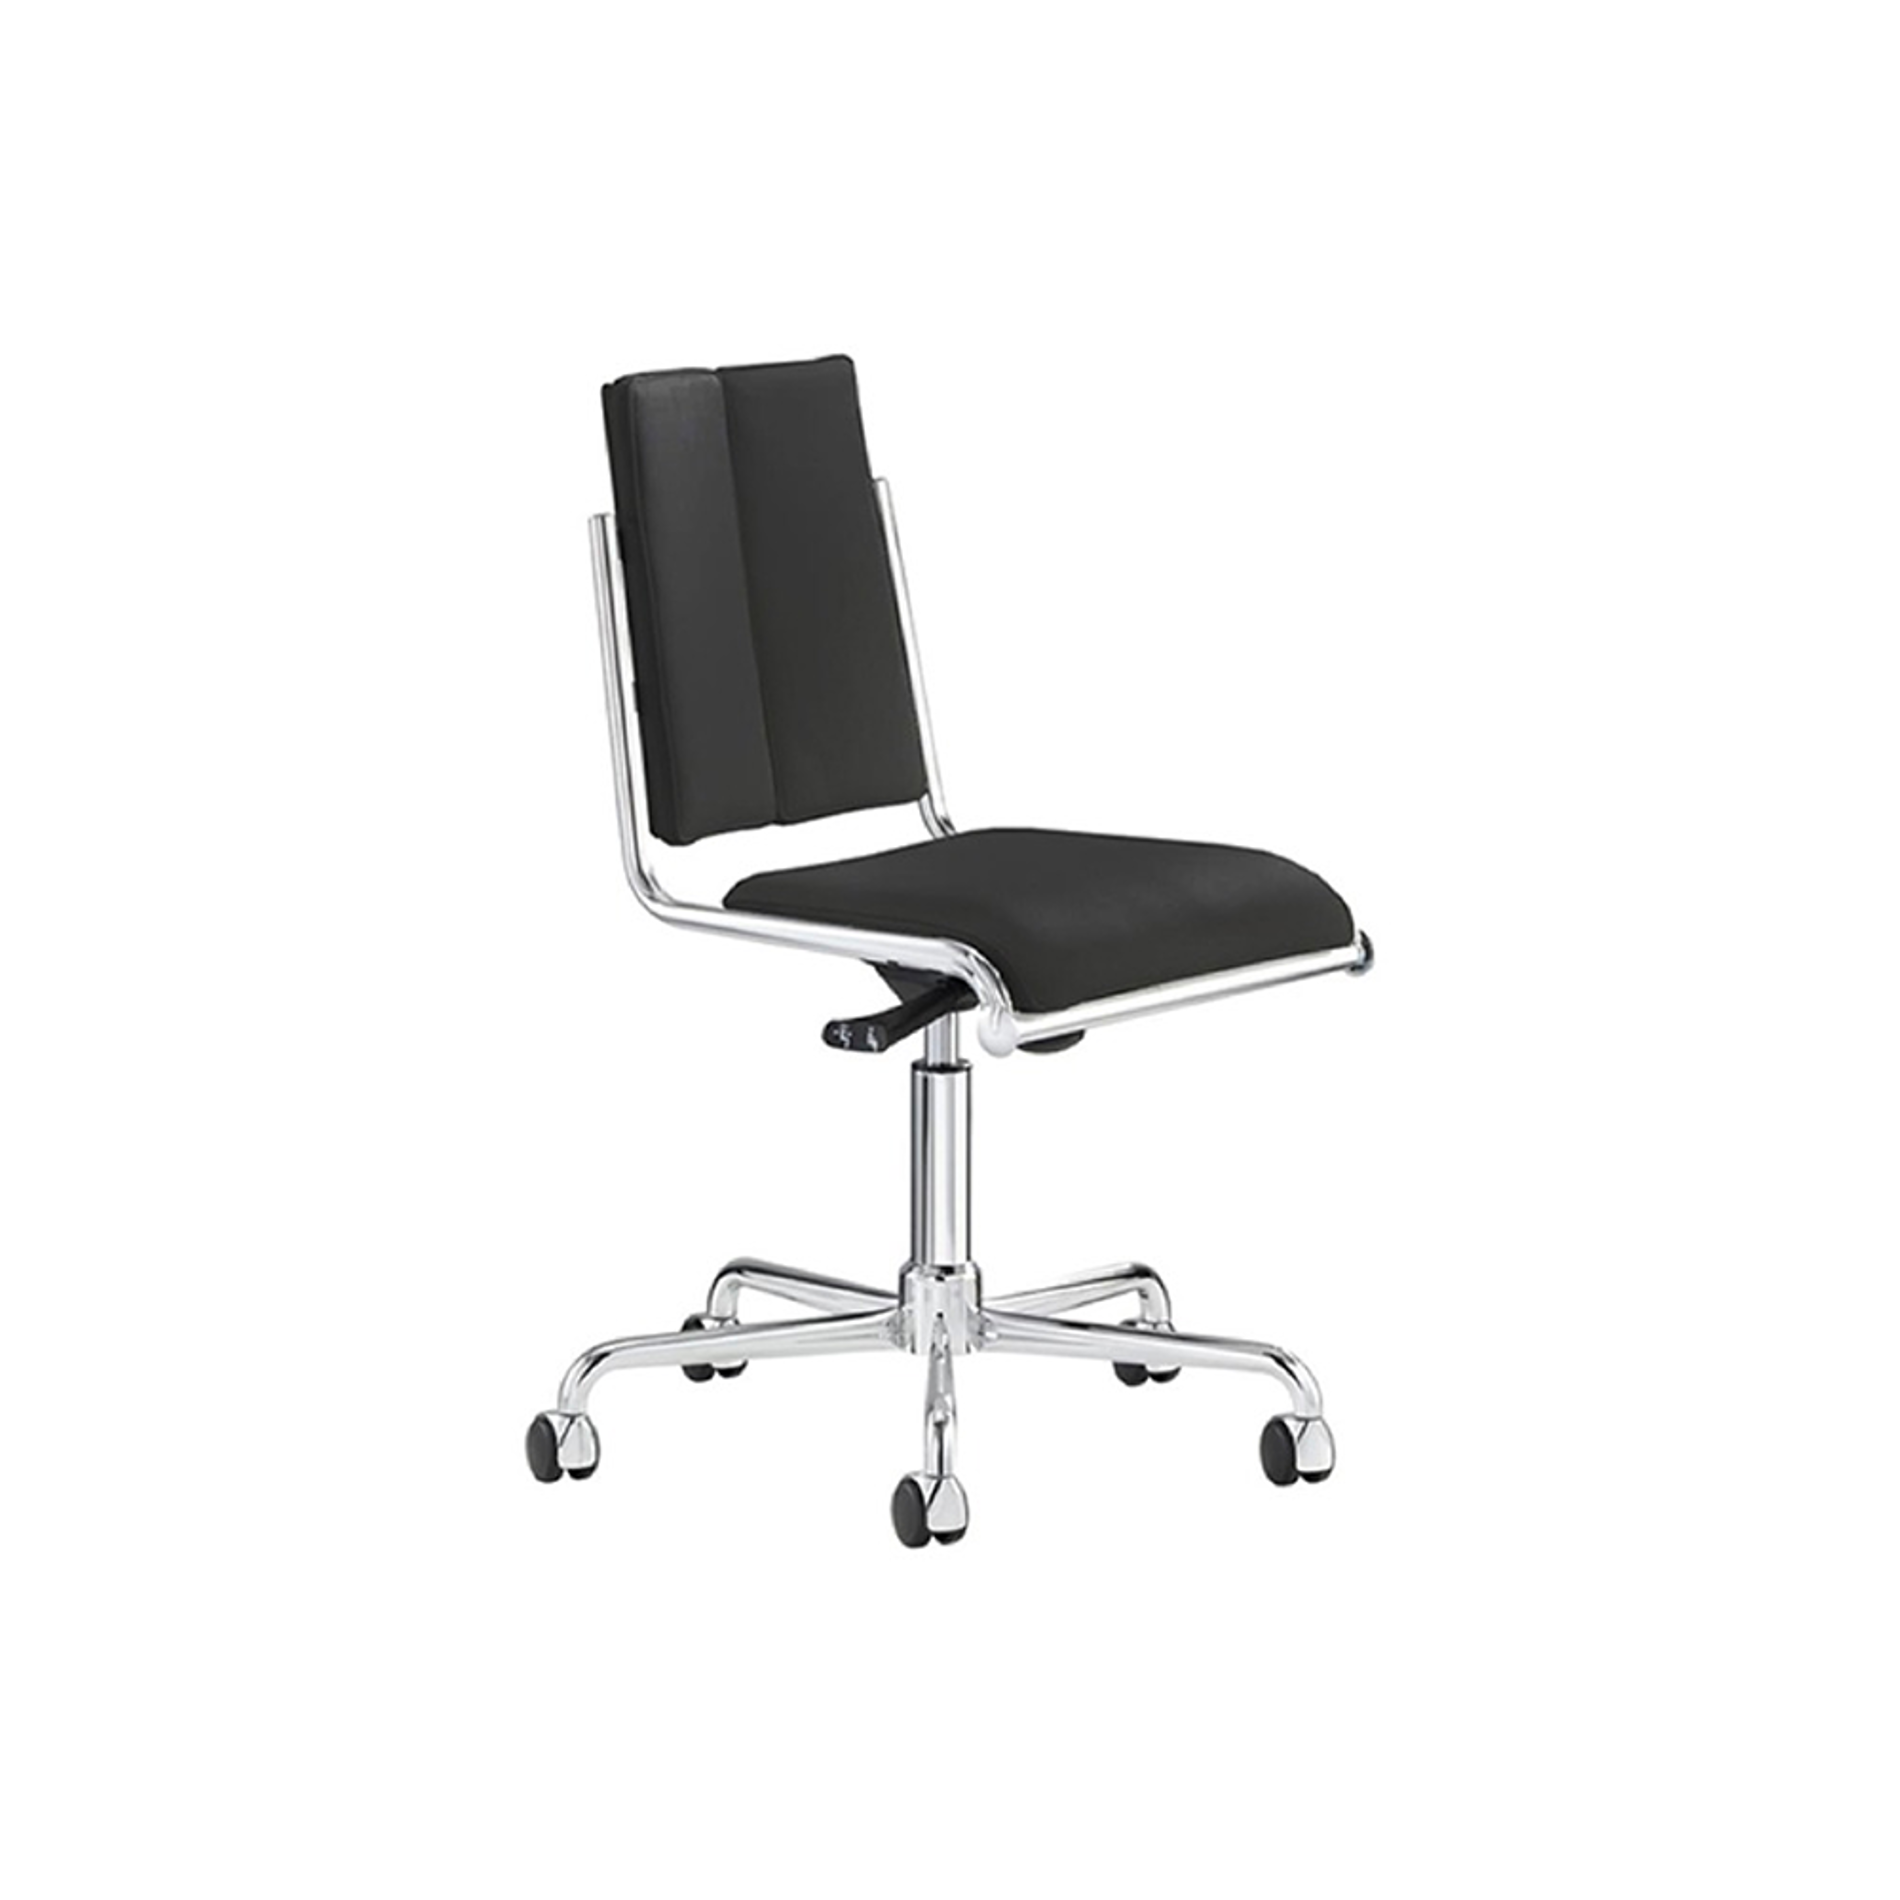 TECTA B12 Desk Chair - Black (Leather)